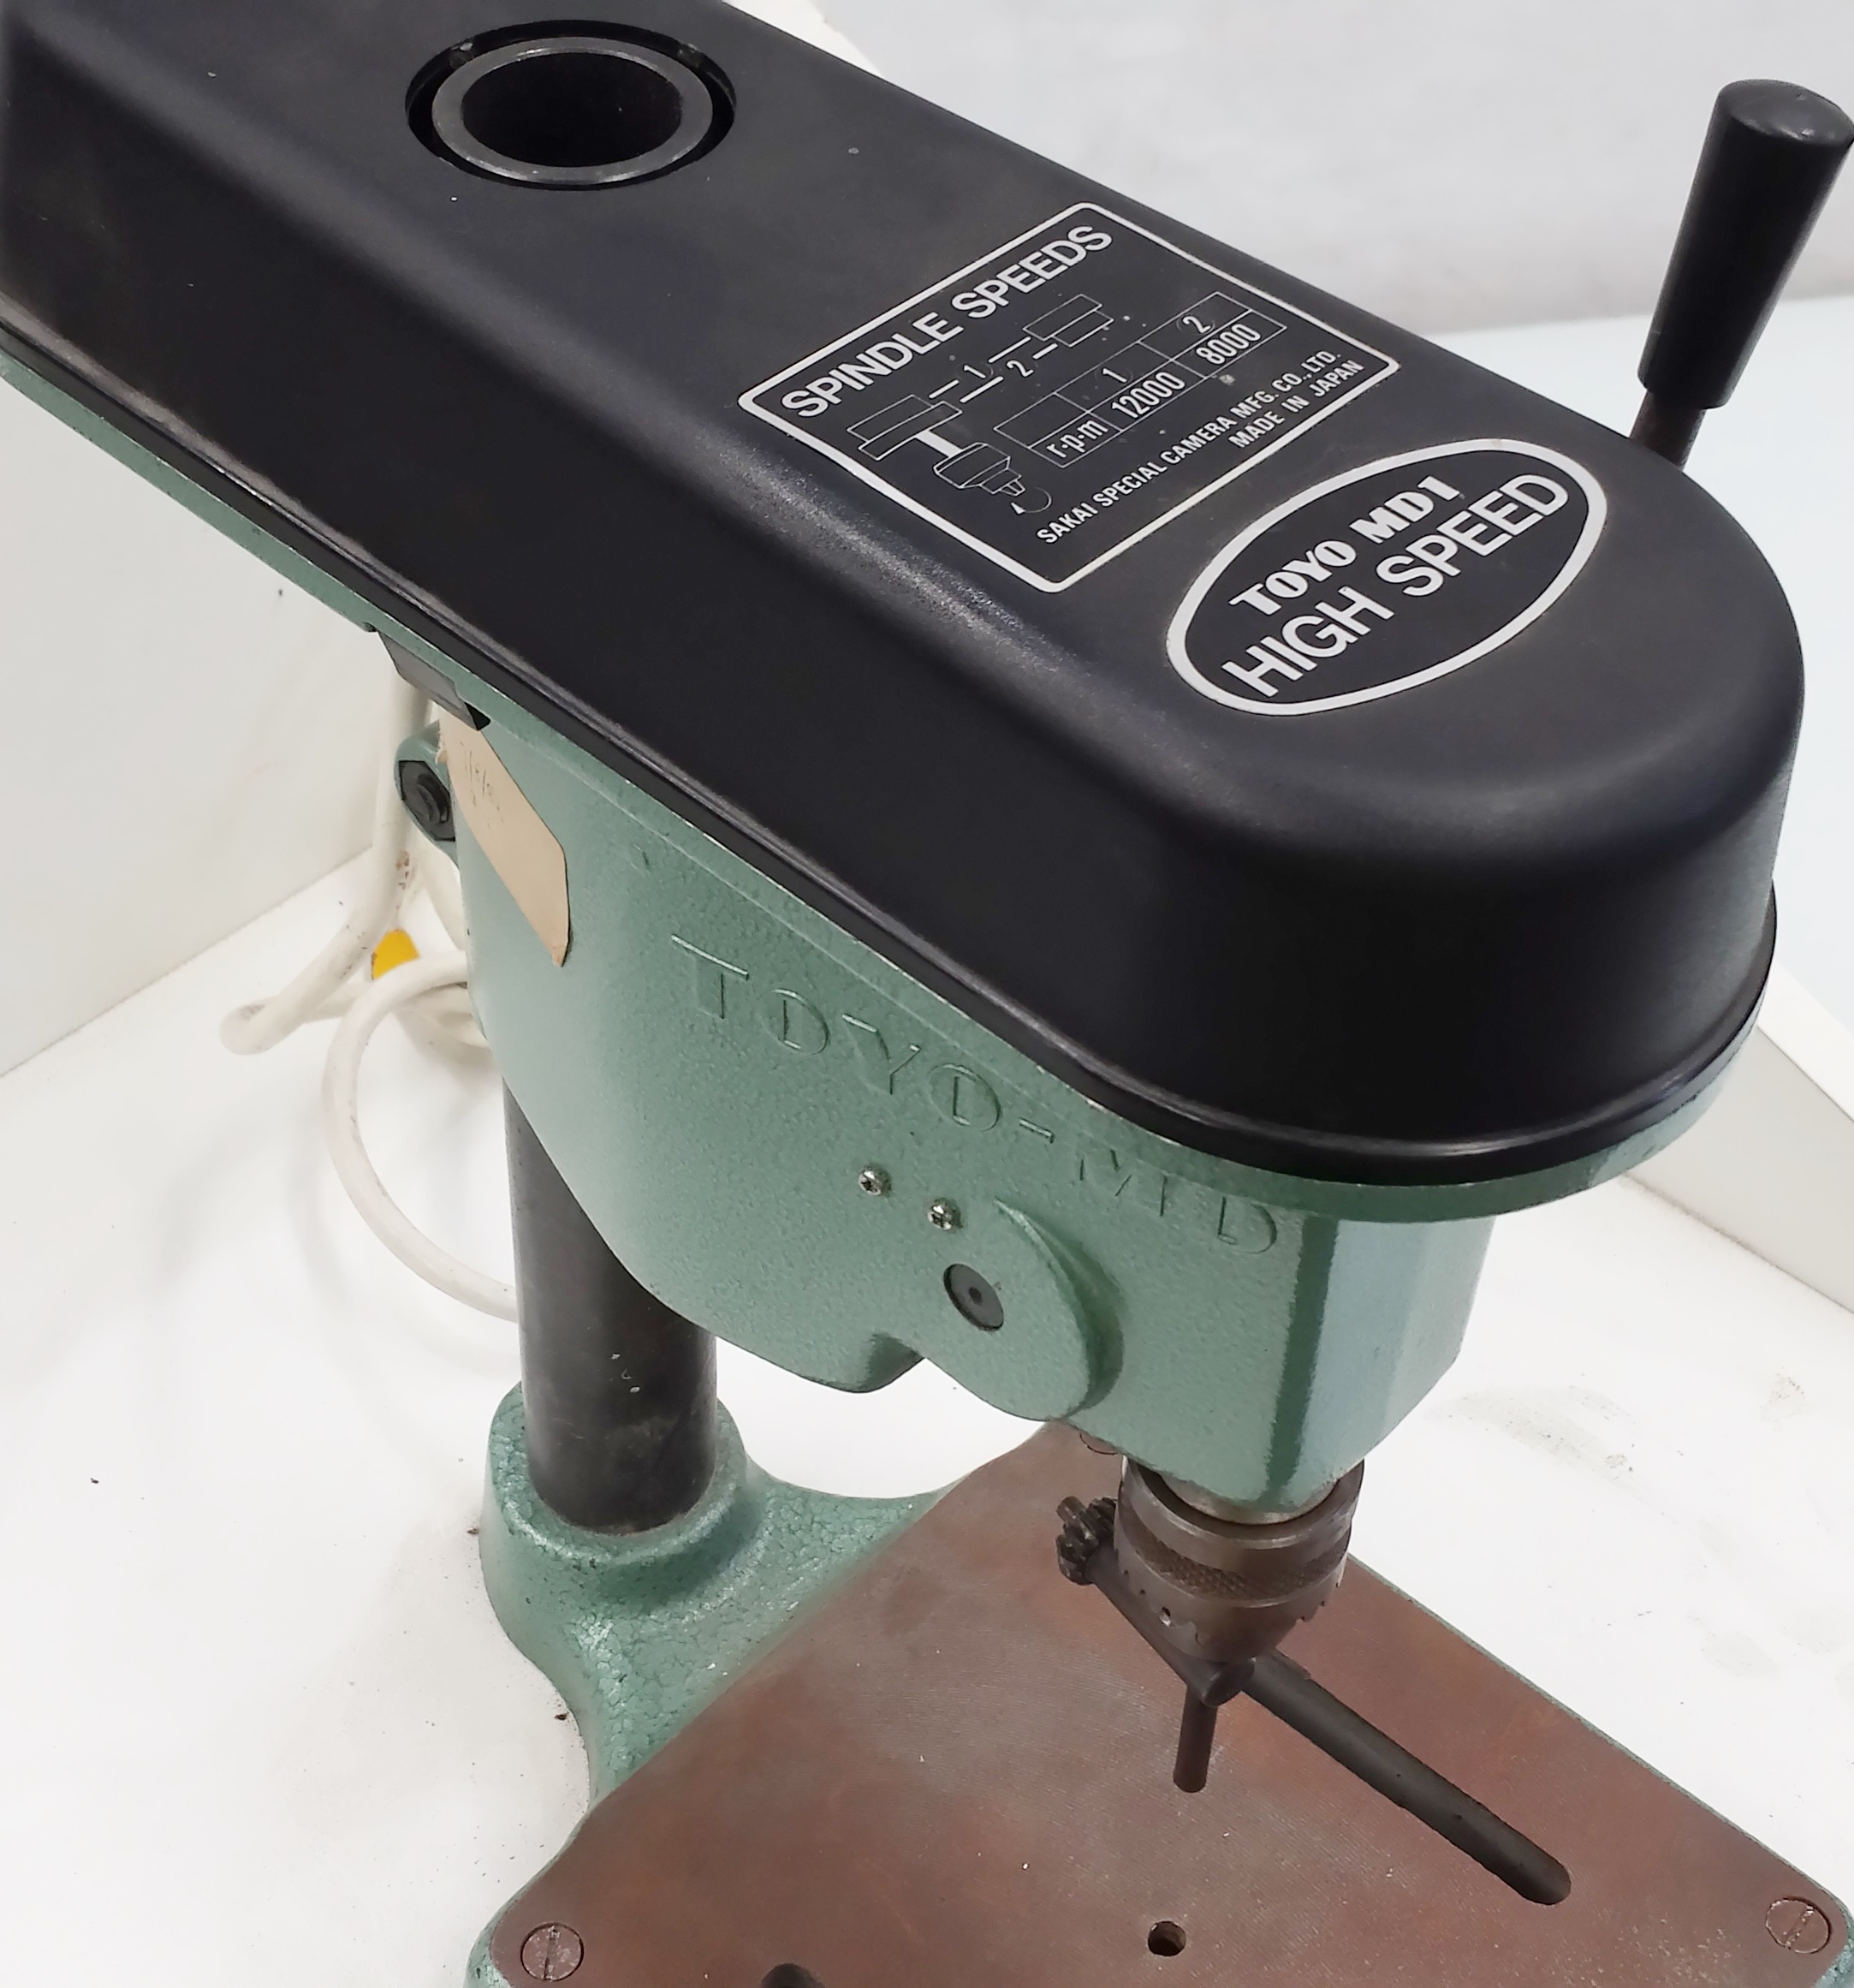 Toyo Mini Drill-1 Electric Drill Press With Custom Built Base